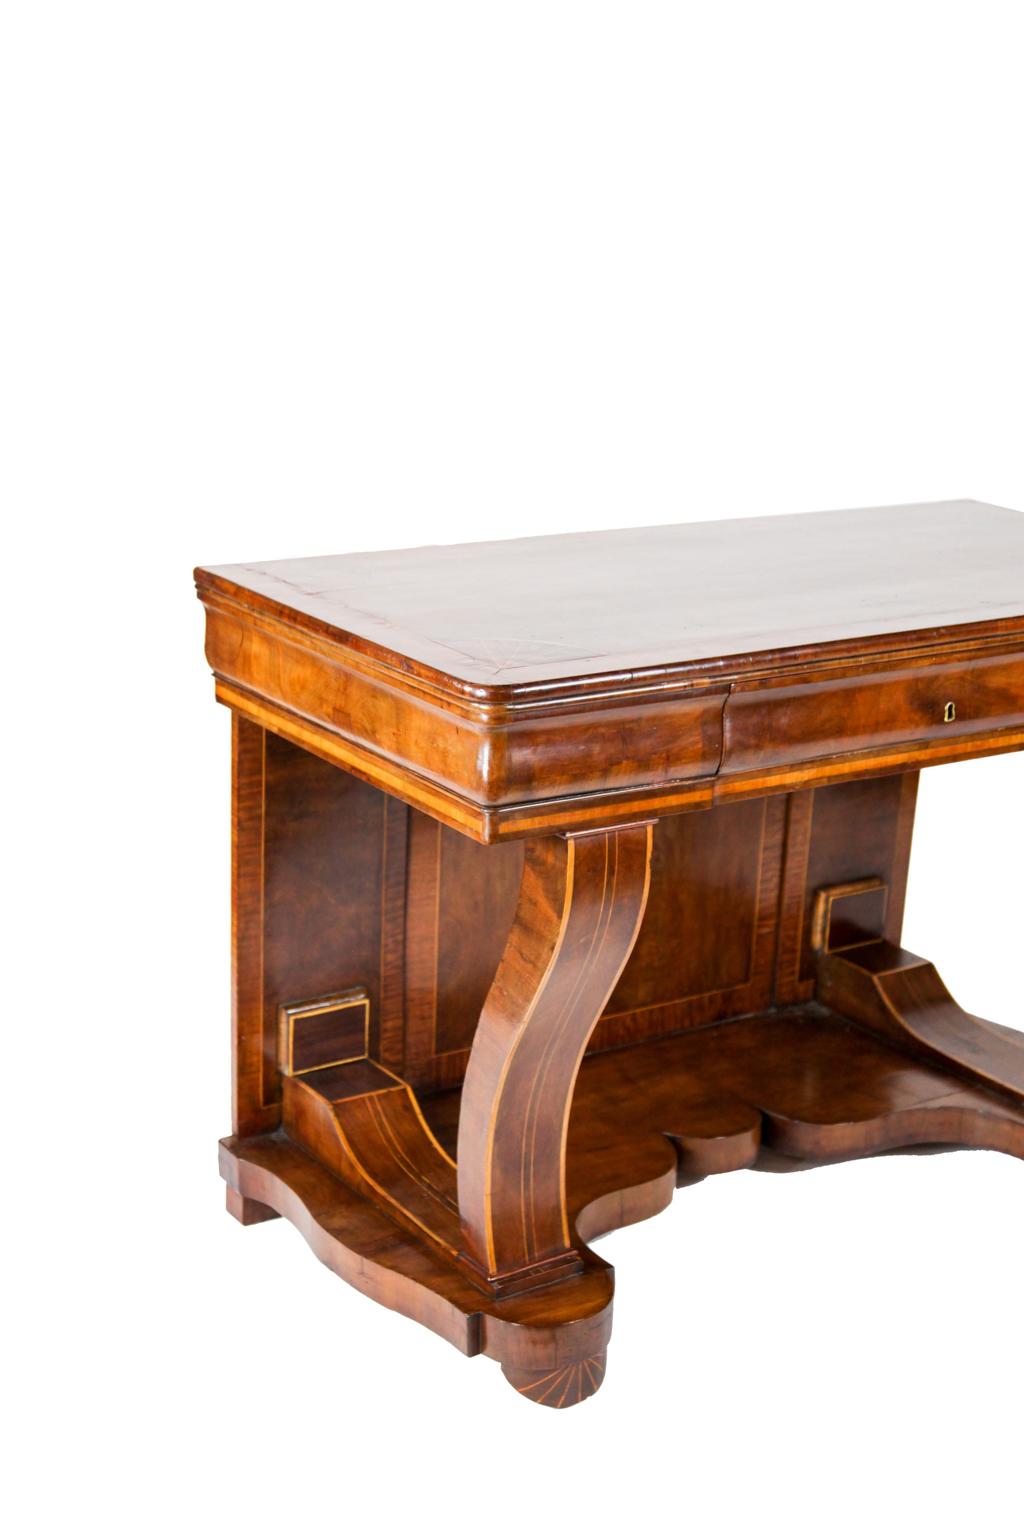 19th Century Inlaid Biedermeier Console Table For Sale 2